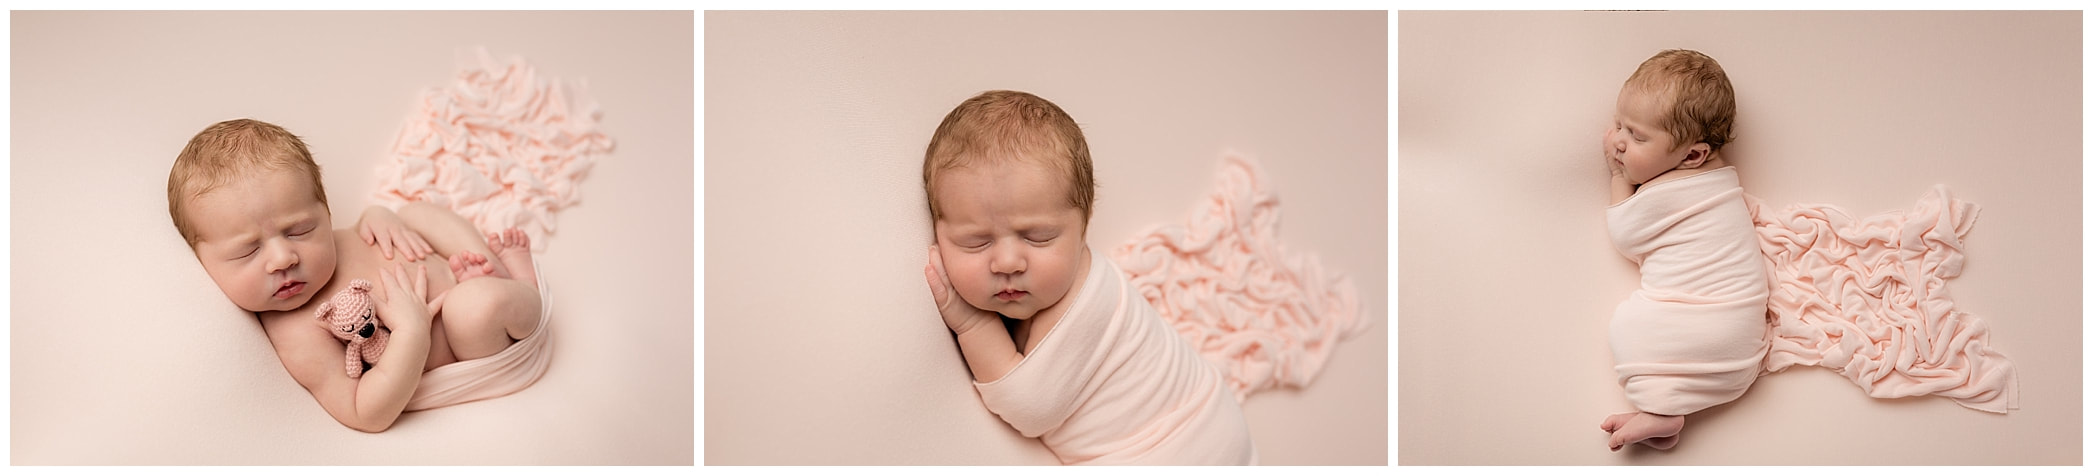 Beanbag poses of baby girl on pink blanket